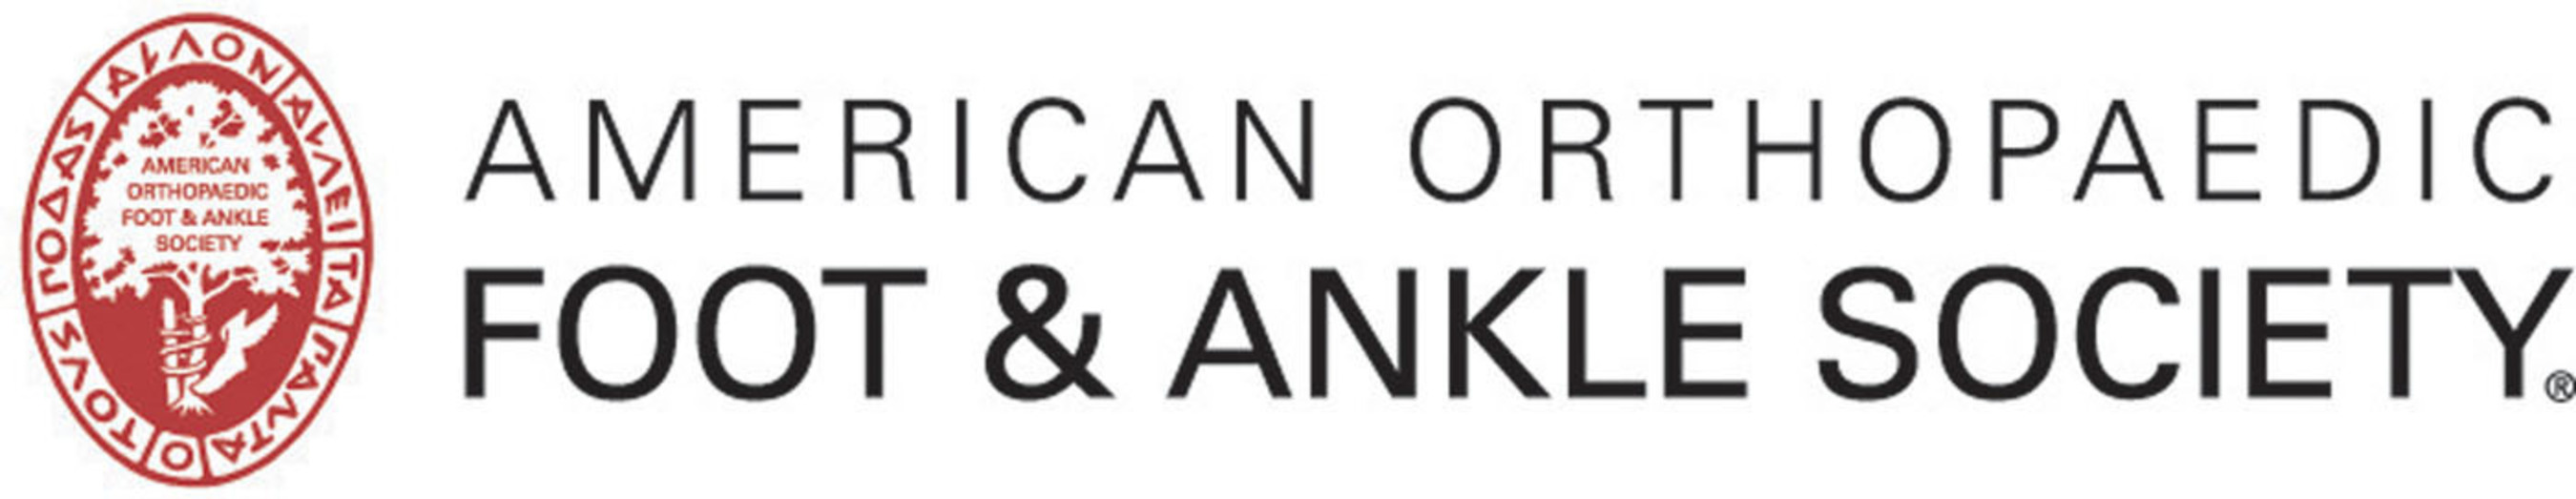 American Orthopaedic Foot & Ankle Society logo. (PRNewsFoto/American Orthopaedic Foot & Ankle Society)